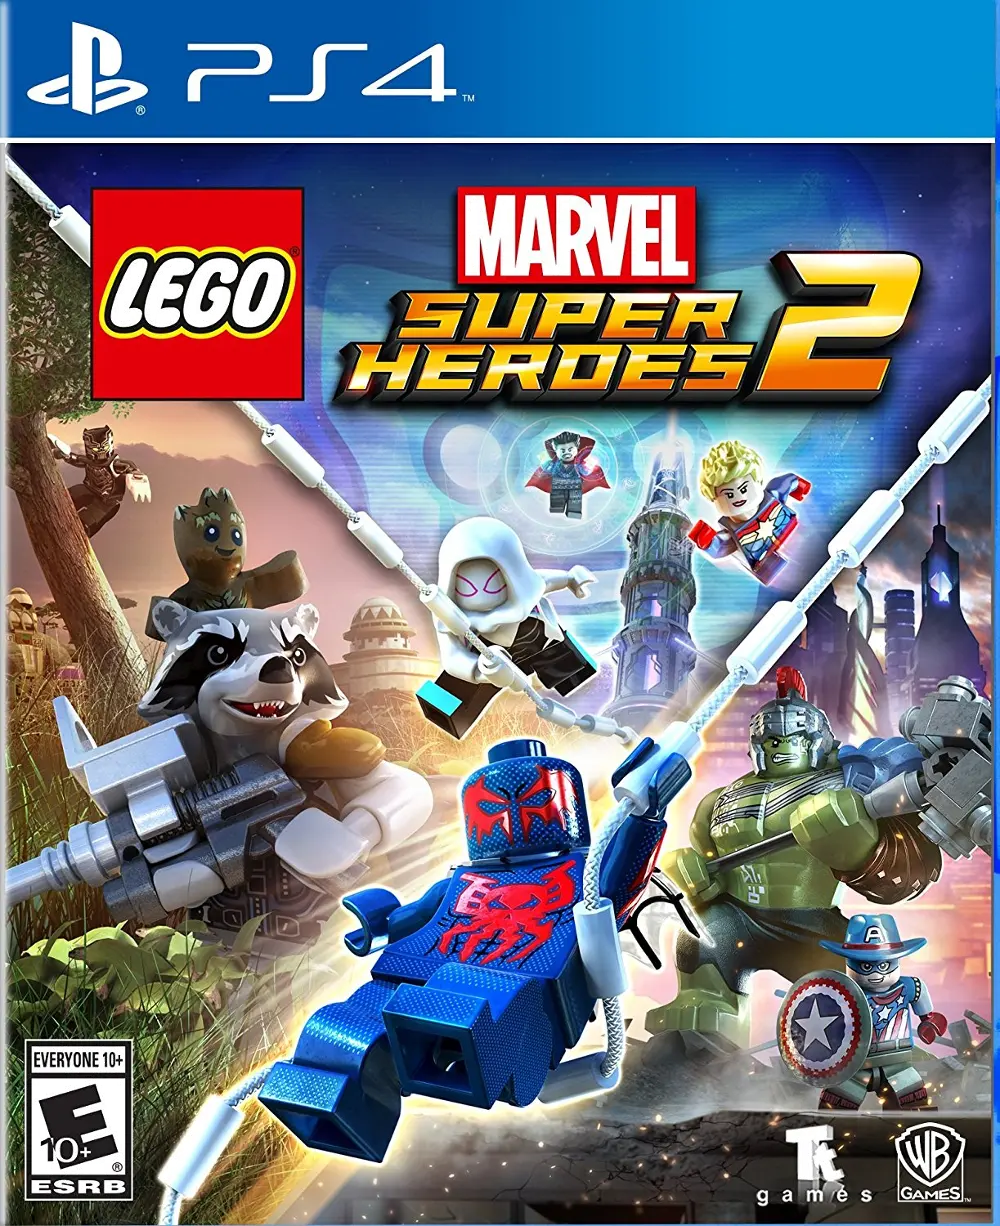 PS4 WAR 59780 Lego: Marvel Superhero 2 - PS4-1